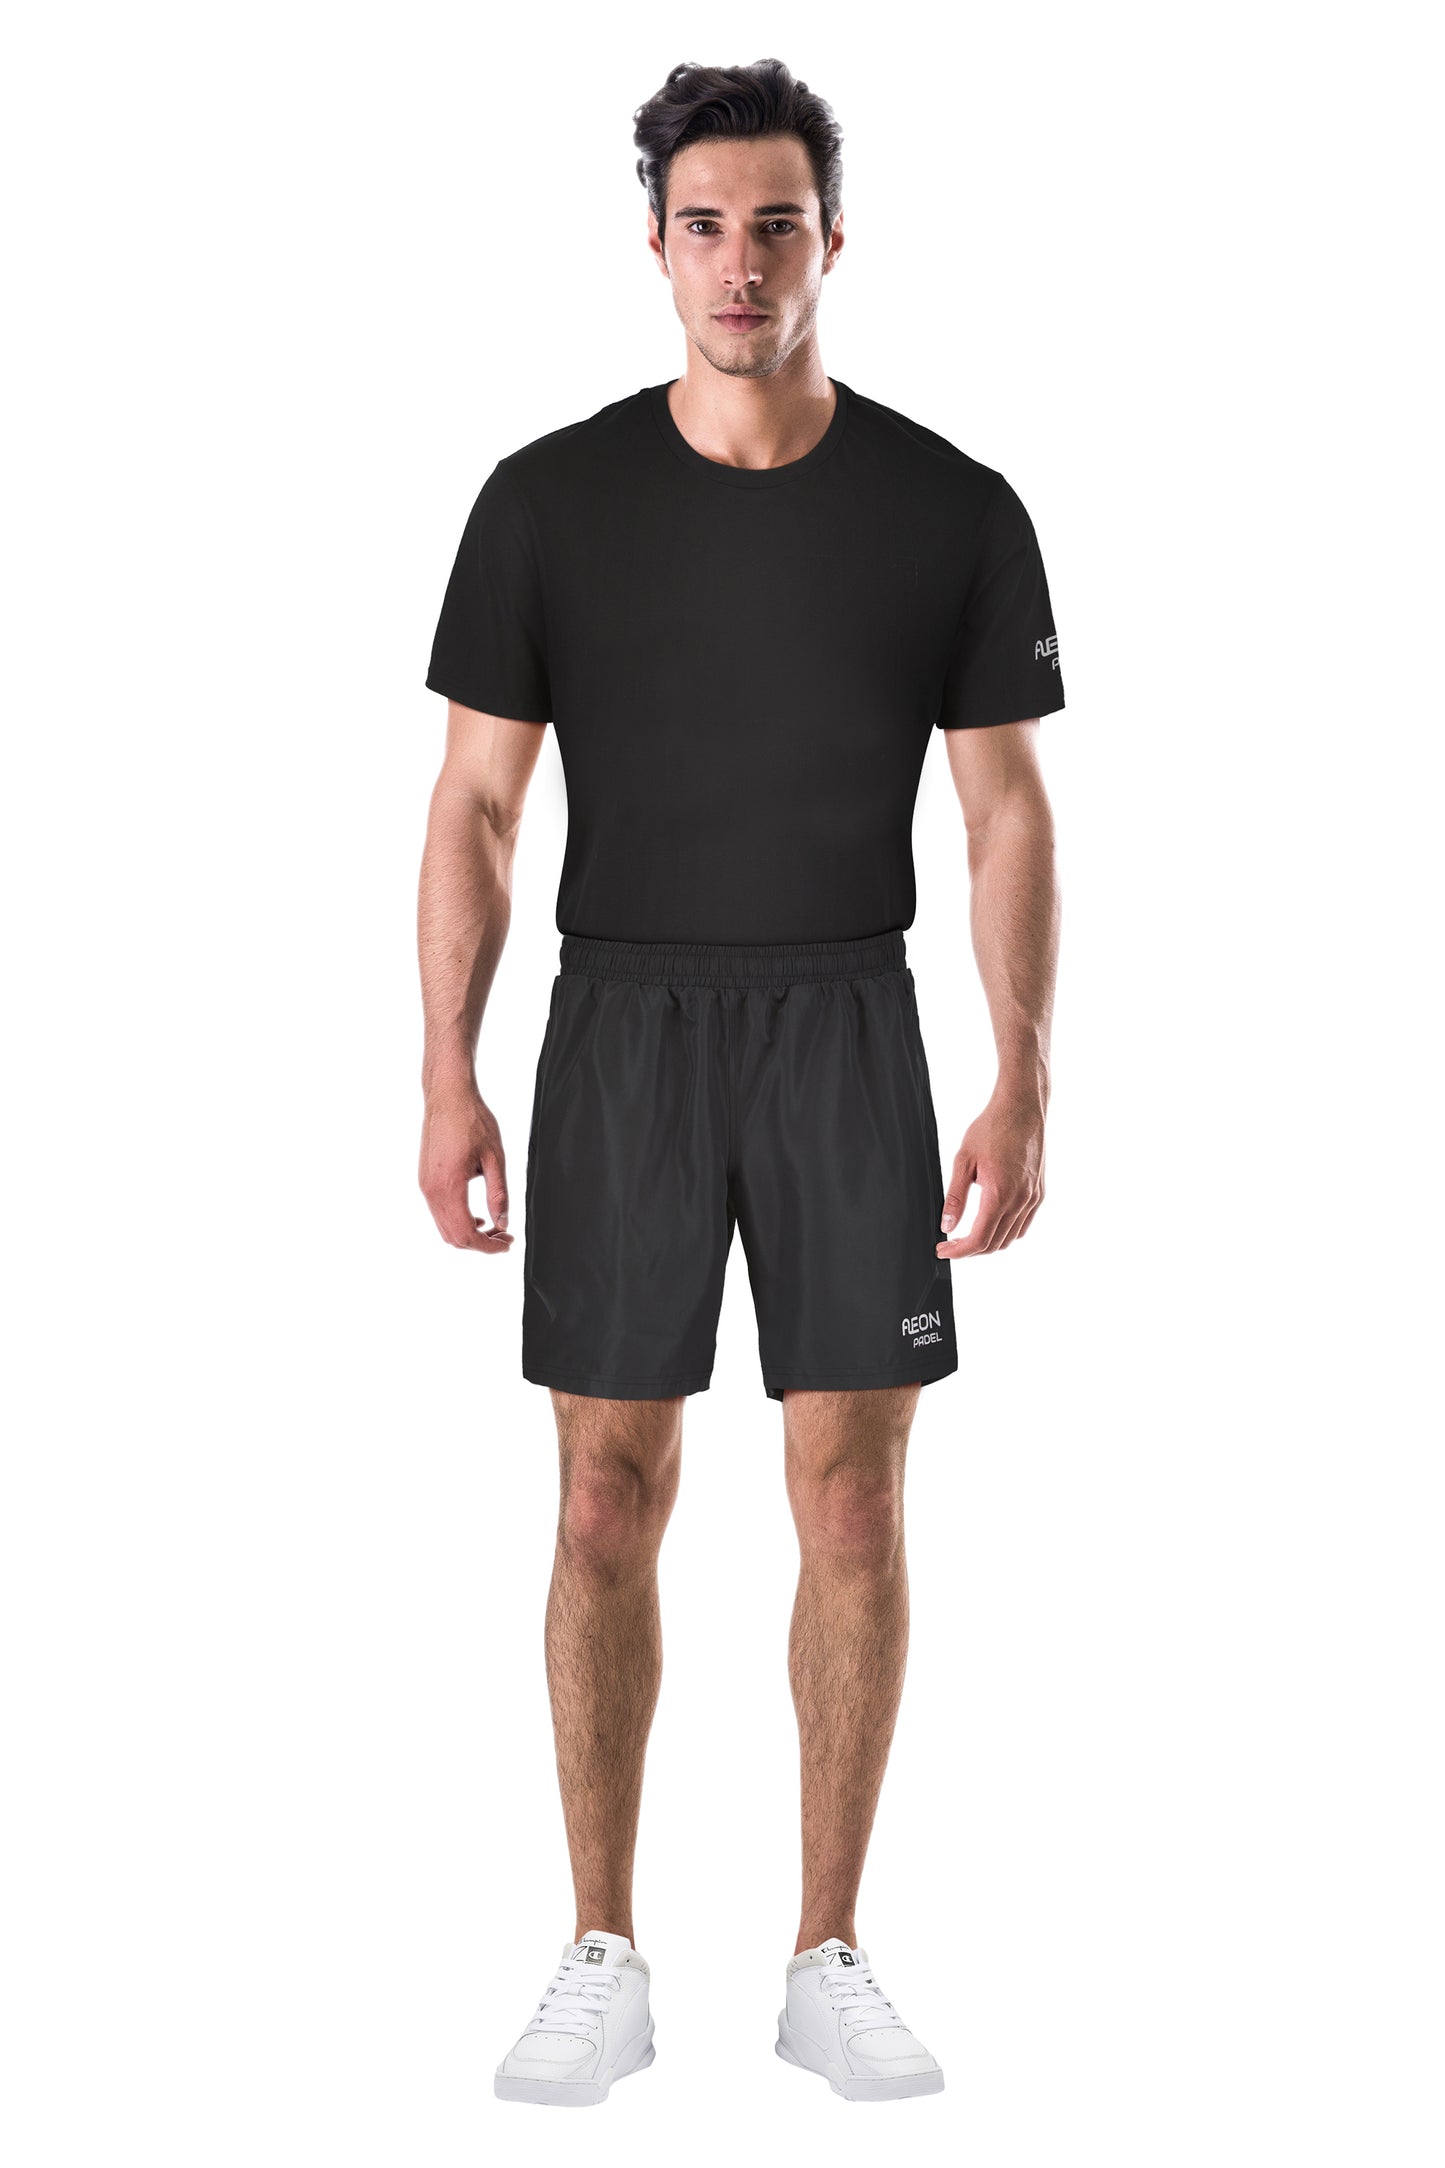 AEON Padel Shorts - Black